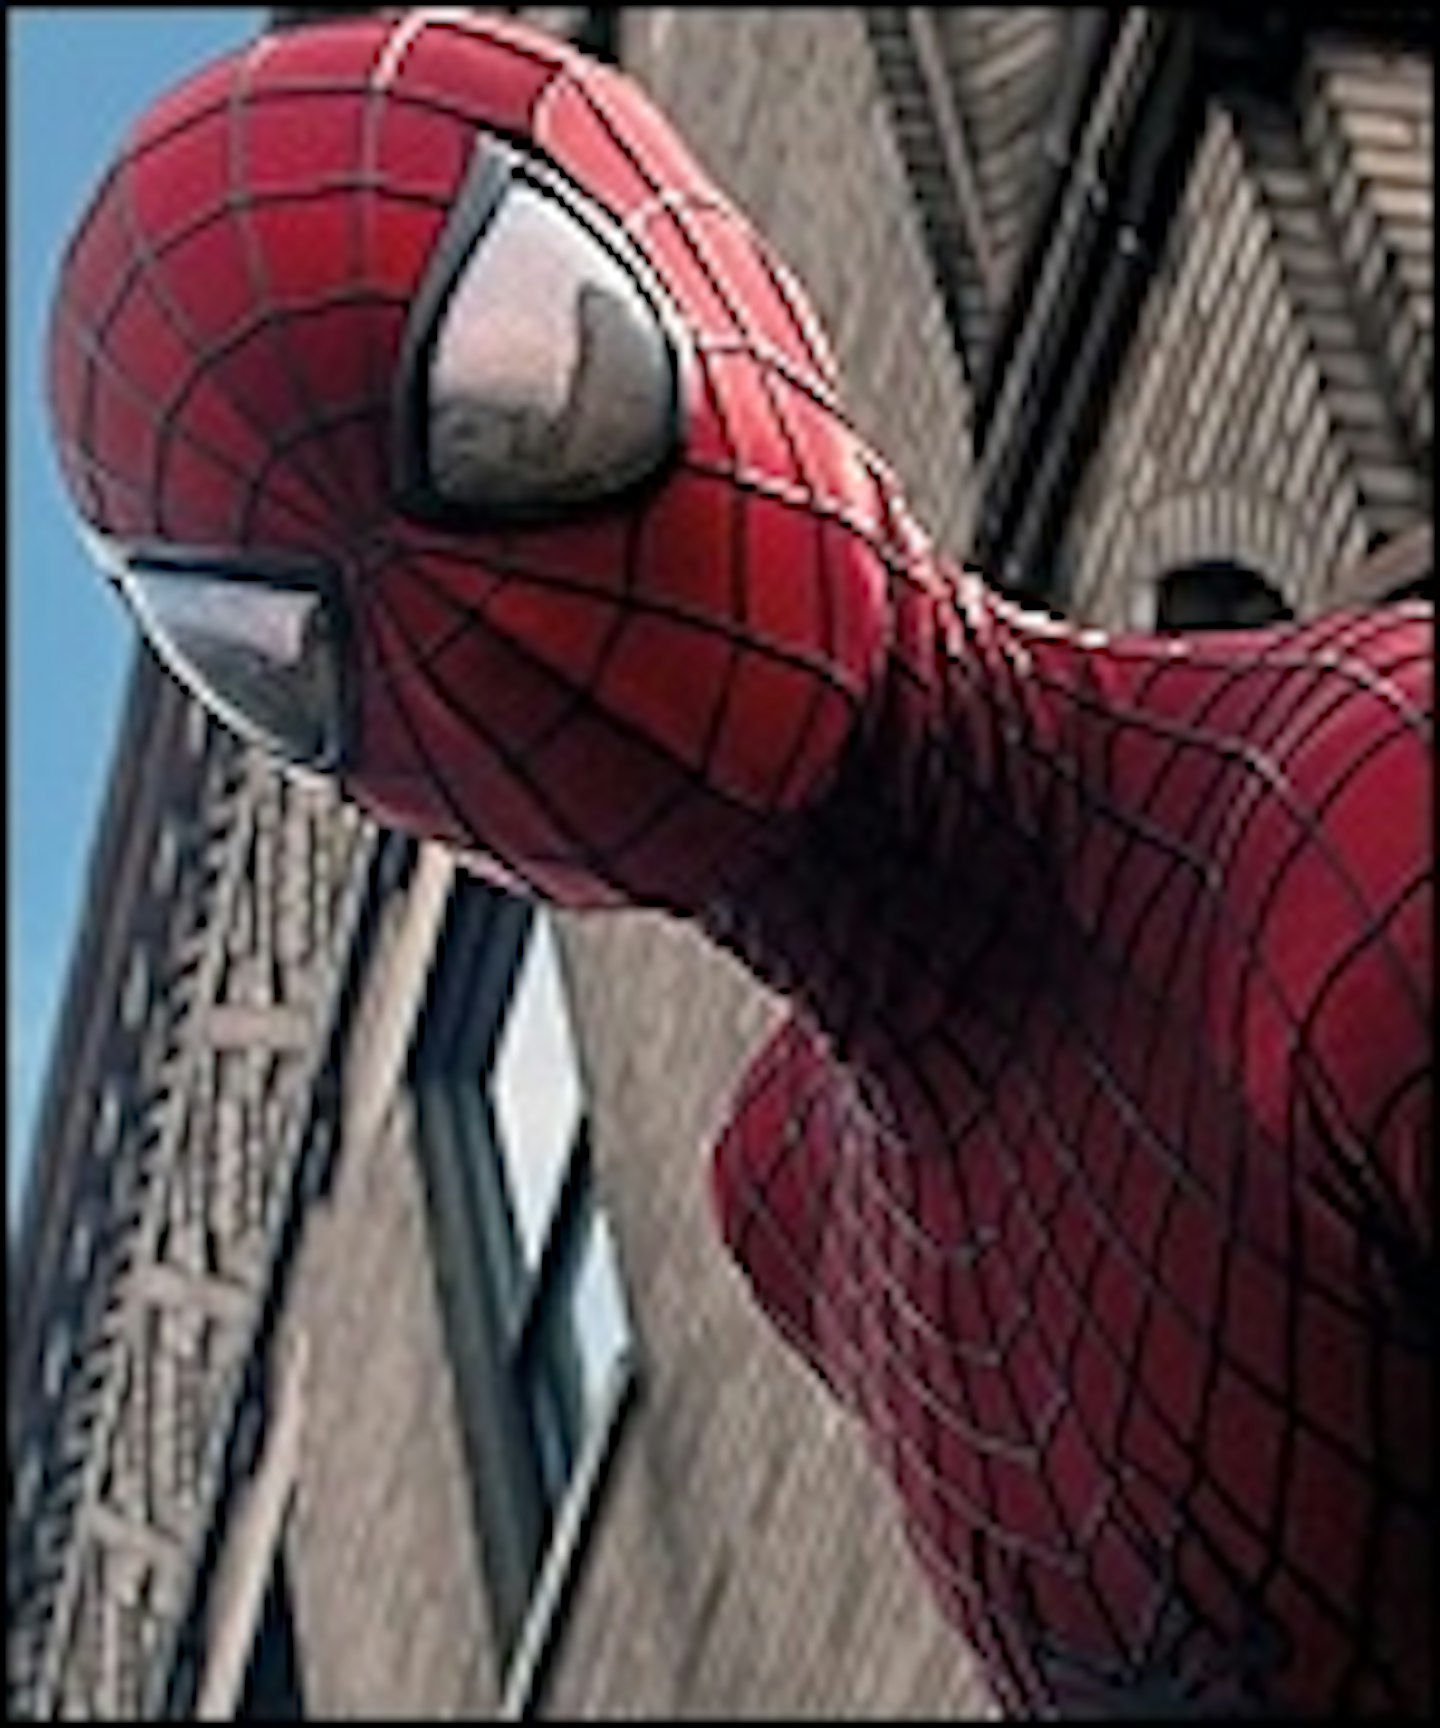 Amazing Spider-Man 2 New Year's Eve Clip Online